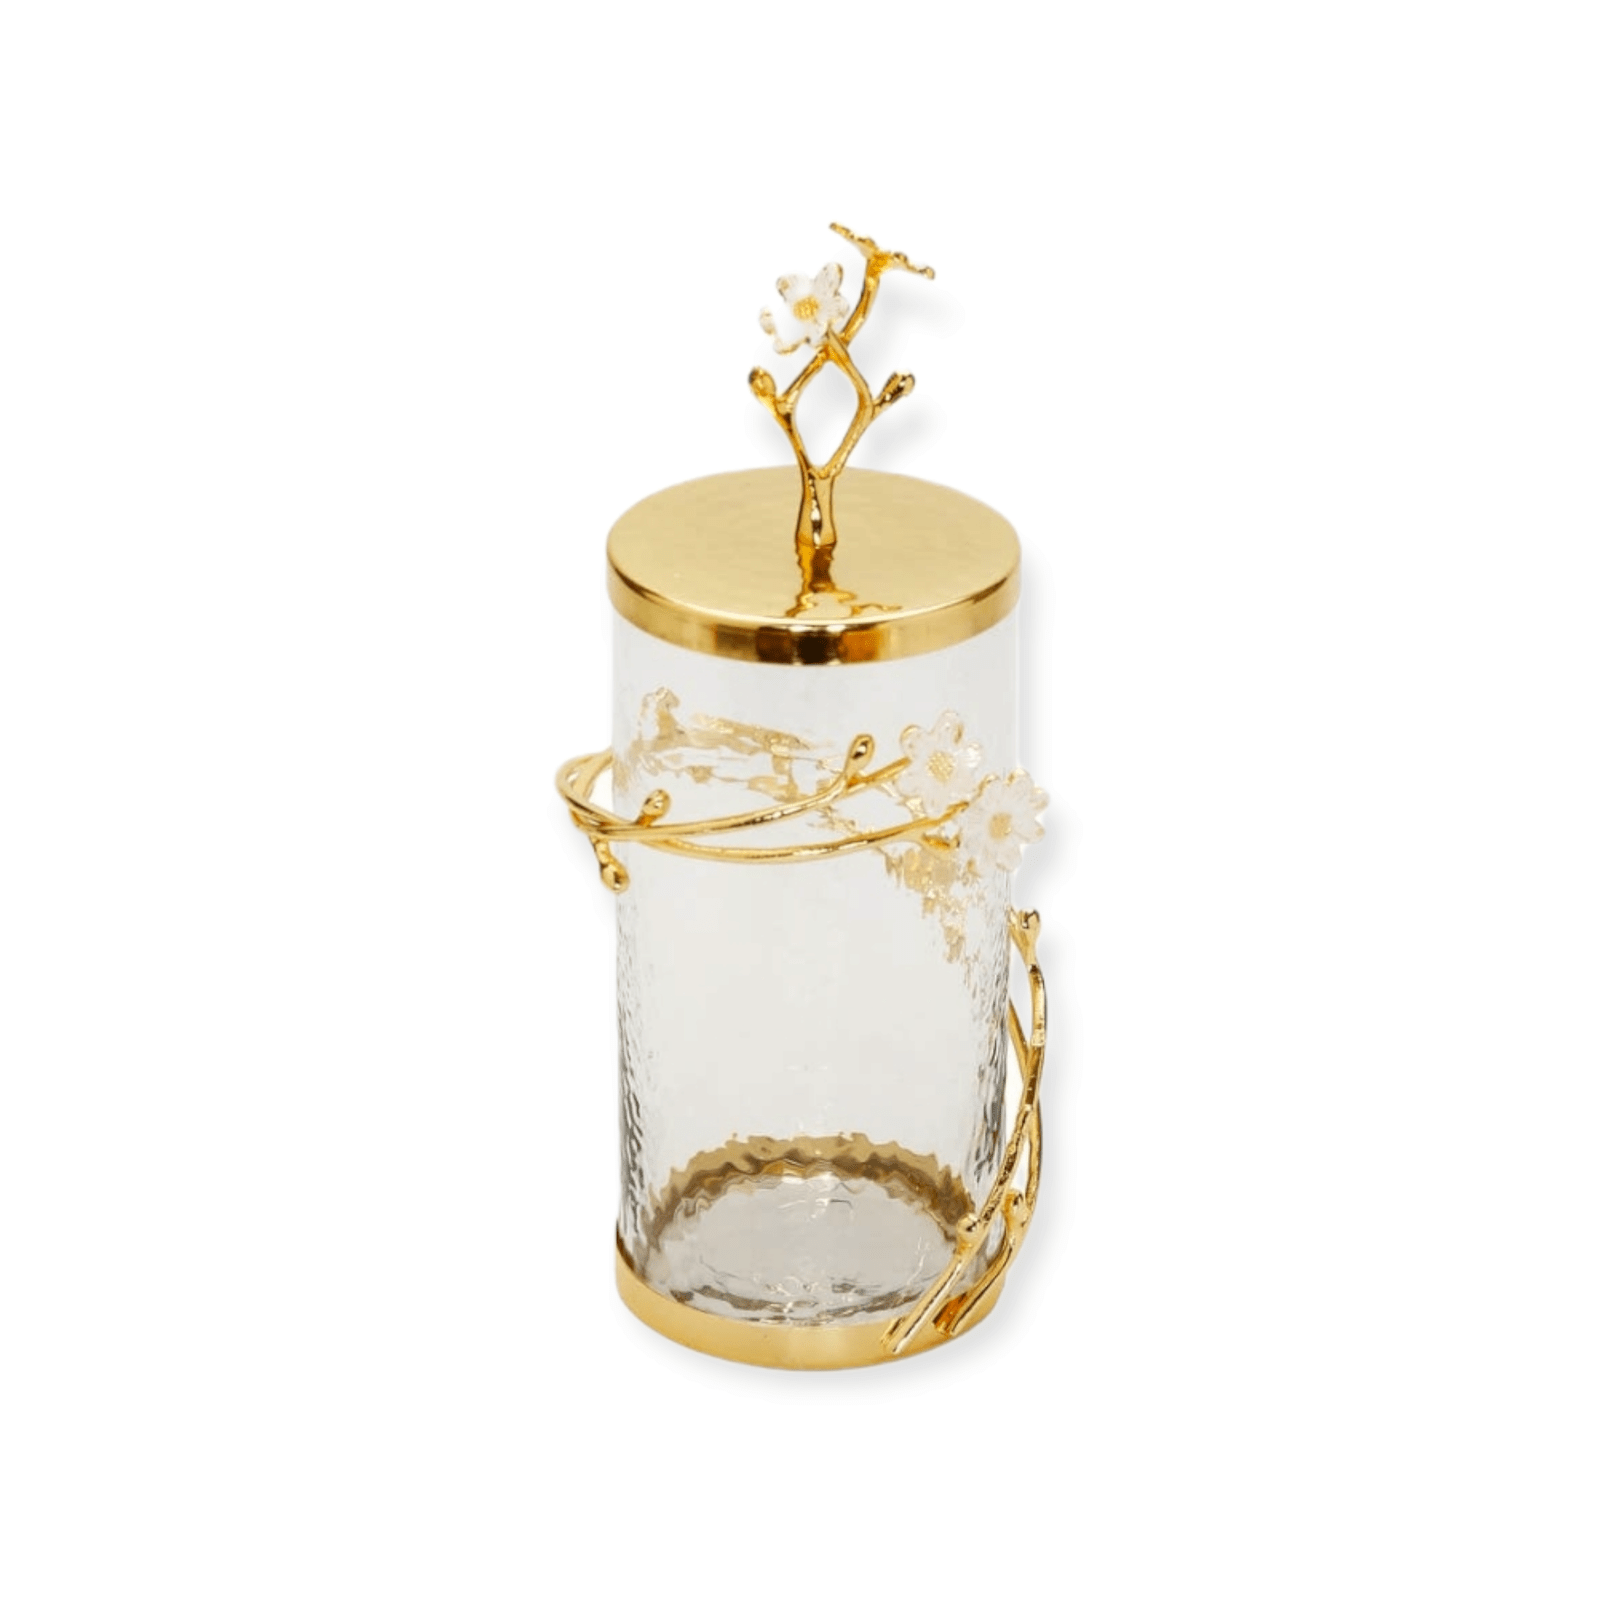 Glass Canister w/Gold Enamel Flower Design - Exquisite Designs Home Décor 